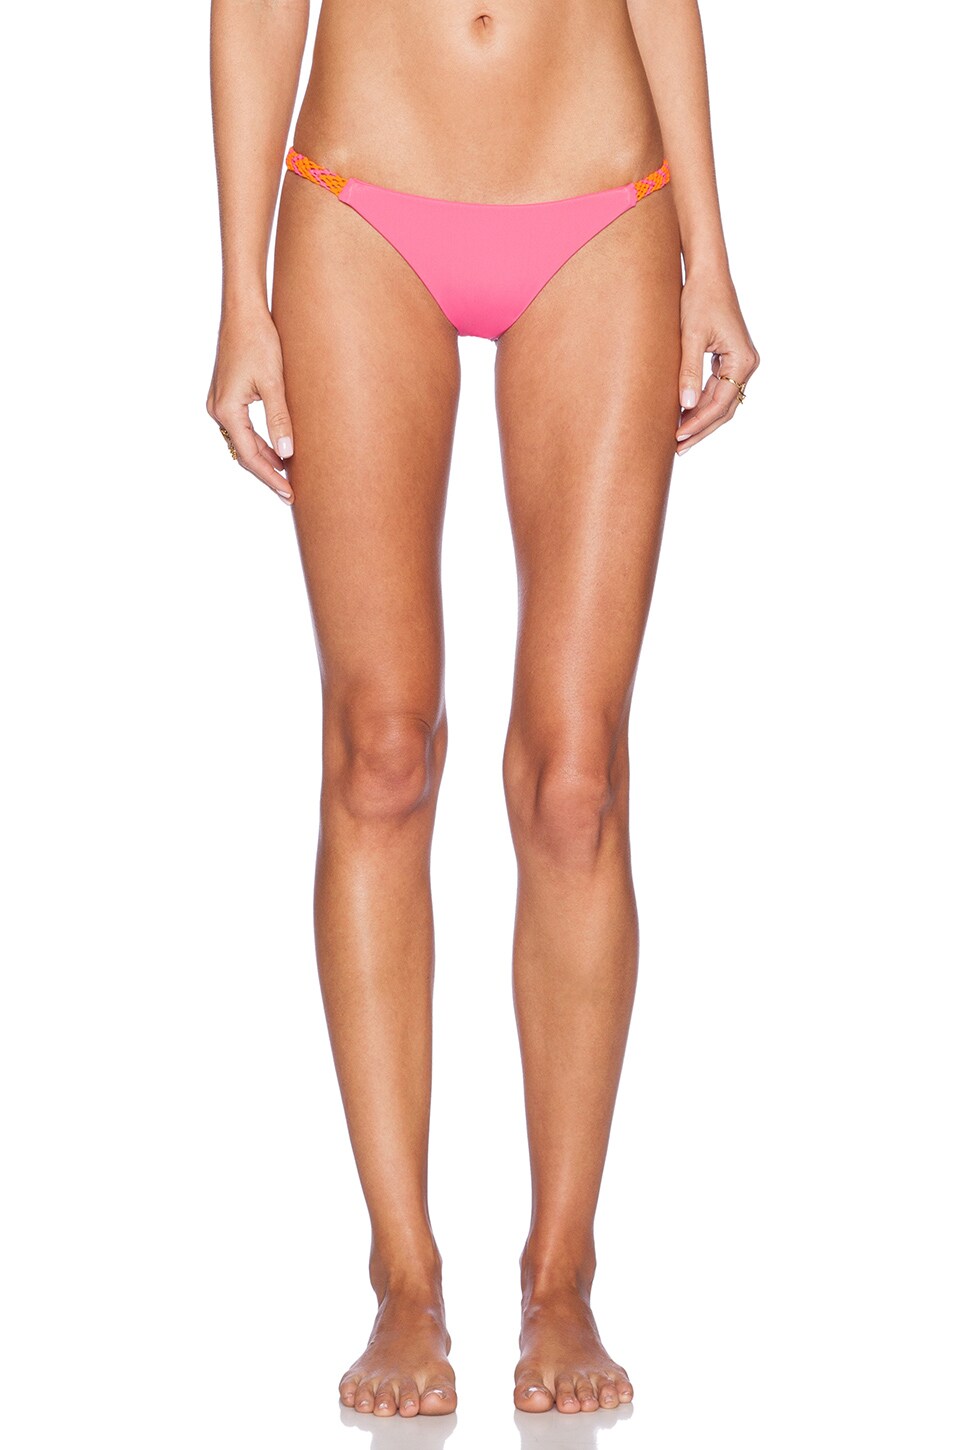 избранноеsiempre golden Tres Amigos Bikini Bottom in Hot Pink. 